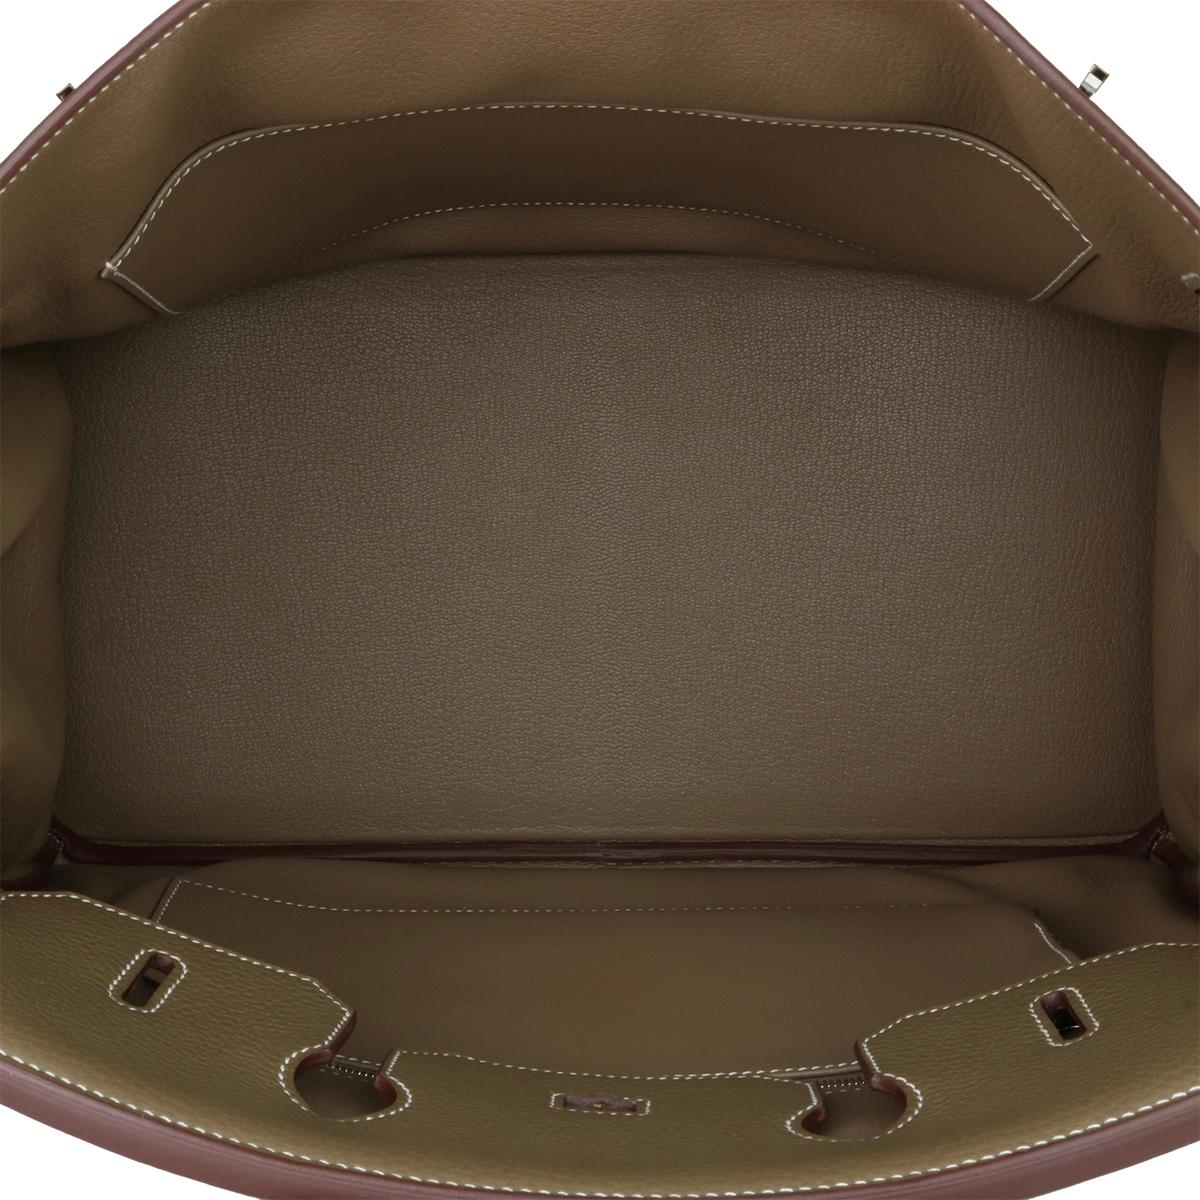 Hermès Birkin 35cm Bag Etoupe Togo Leather with Palladium Hardware Stamp C 2018 8